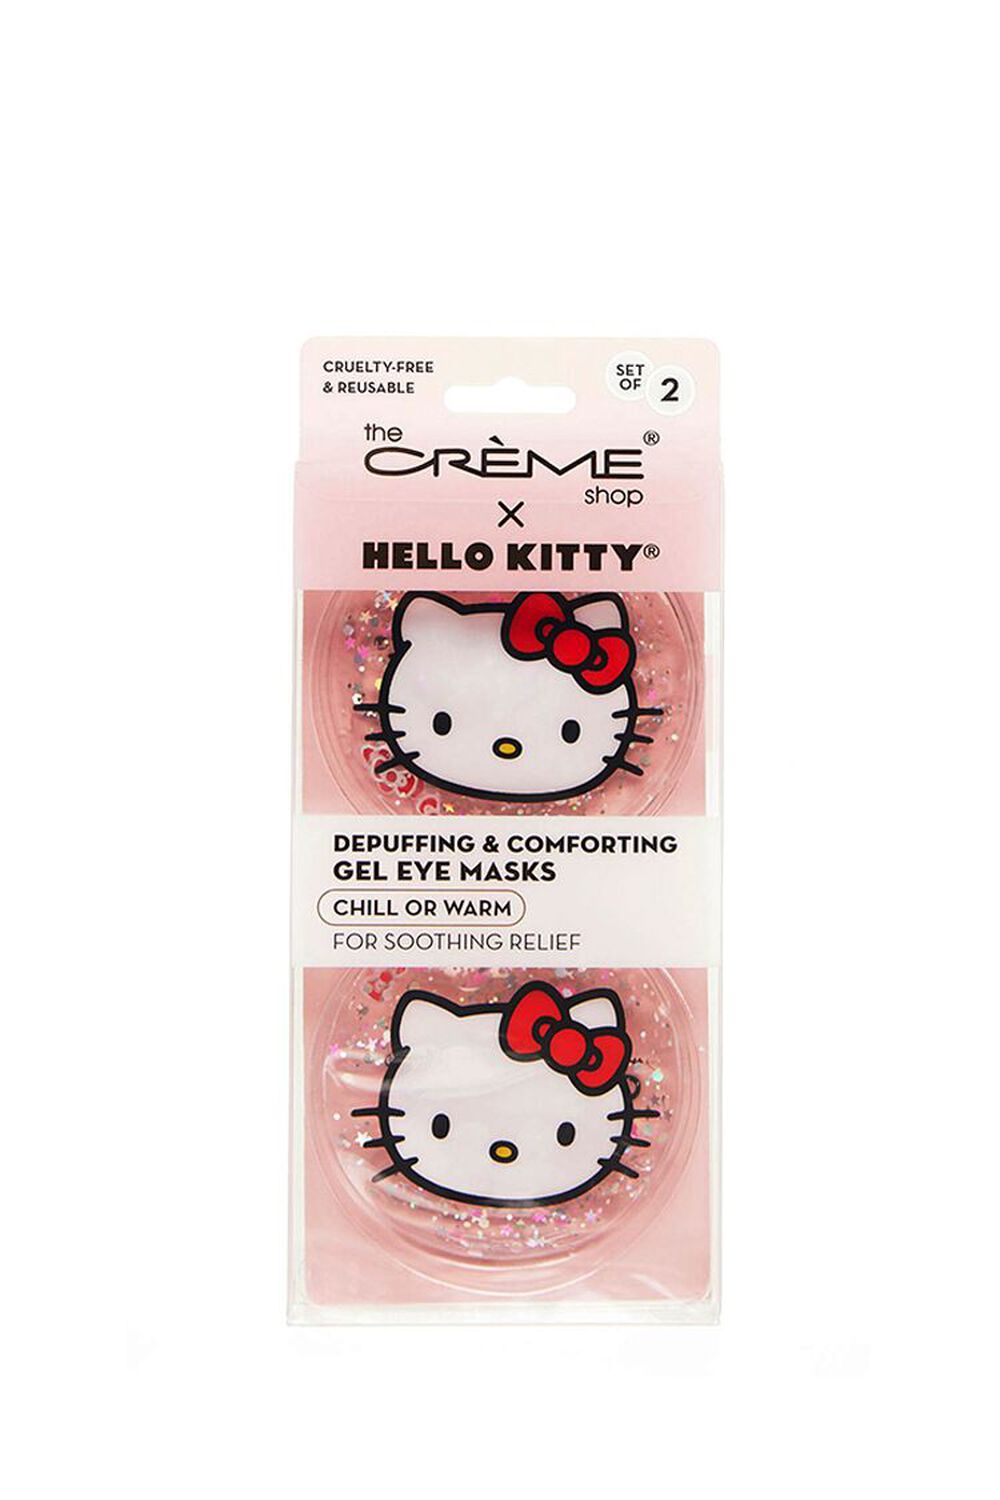 The Crème Shop x Hello Kitty Reusable Gel Eye Masks